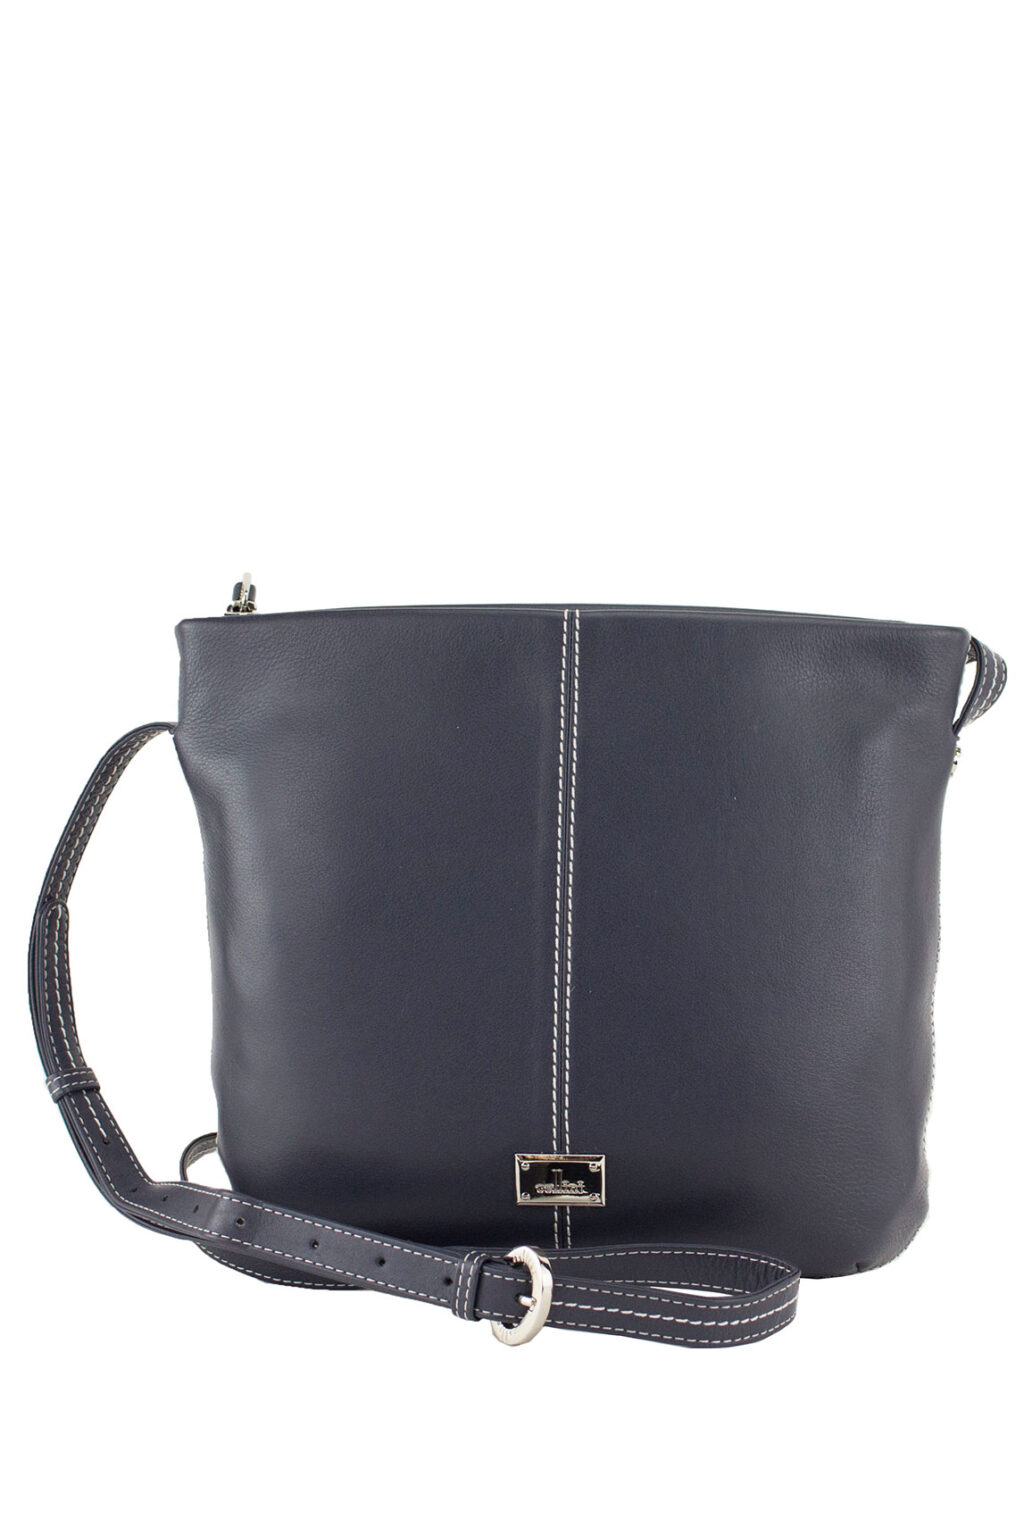 Cellini Handbags | Designer Cellini Leather Hand Bags Online